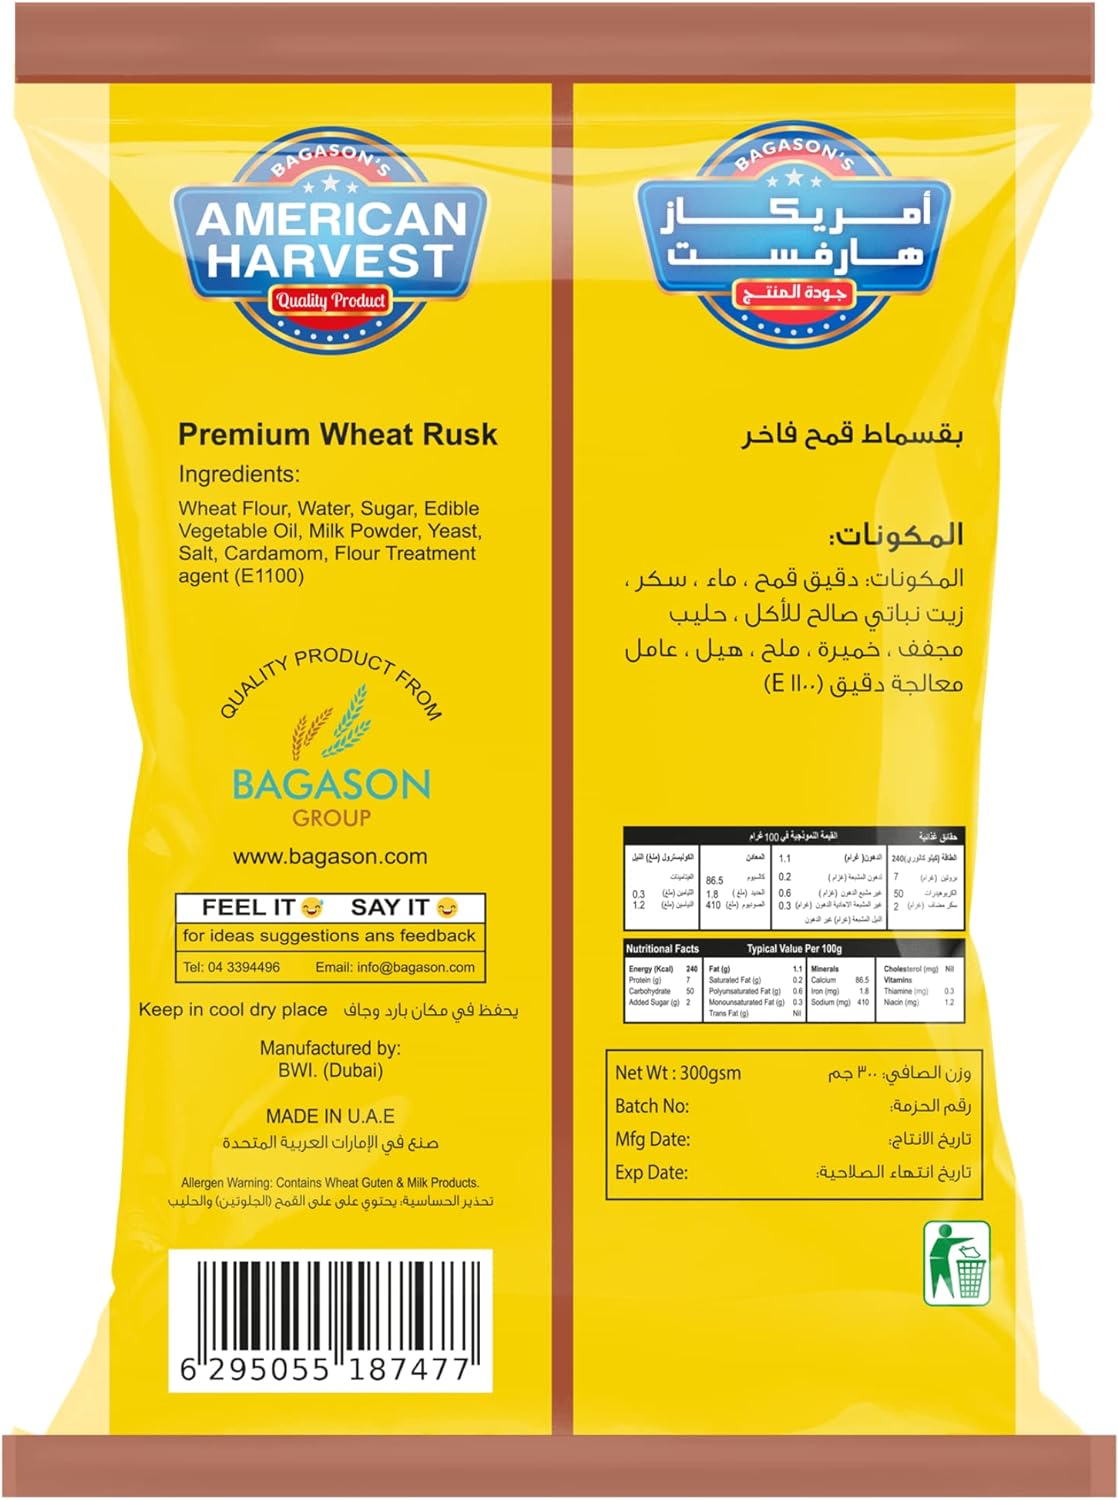 American Harvest Chai Toast Premium Wheat Rusk with Added Cardamom, 300 gm